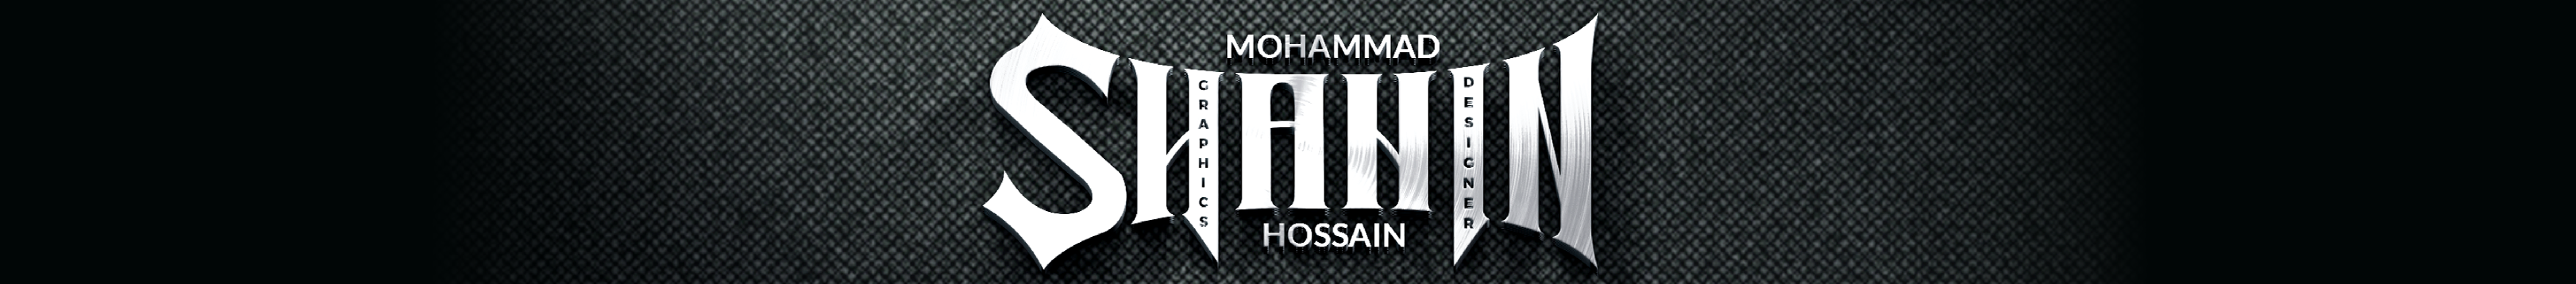 Md Shahin Hossains profilbanner